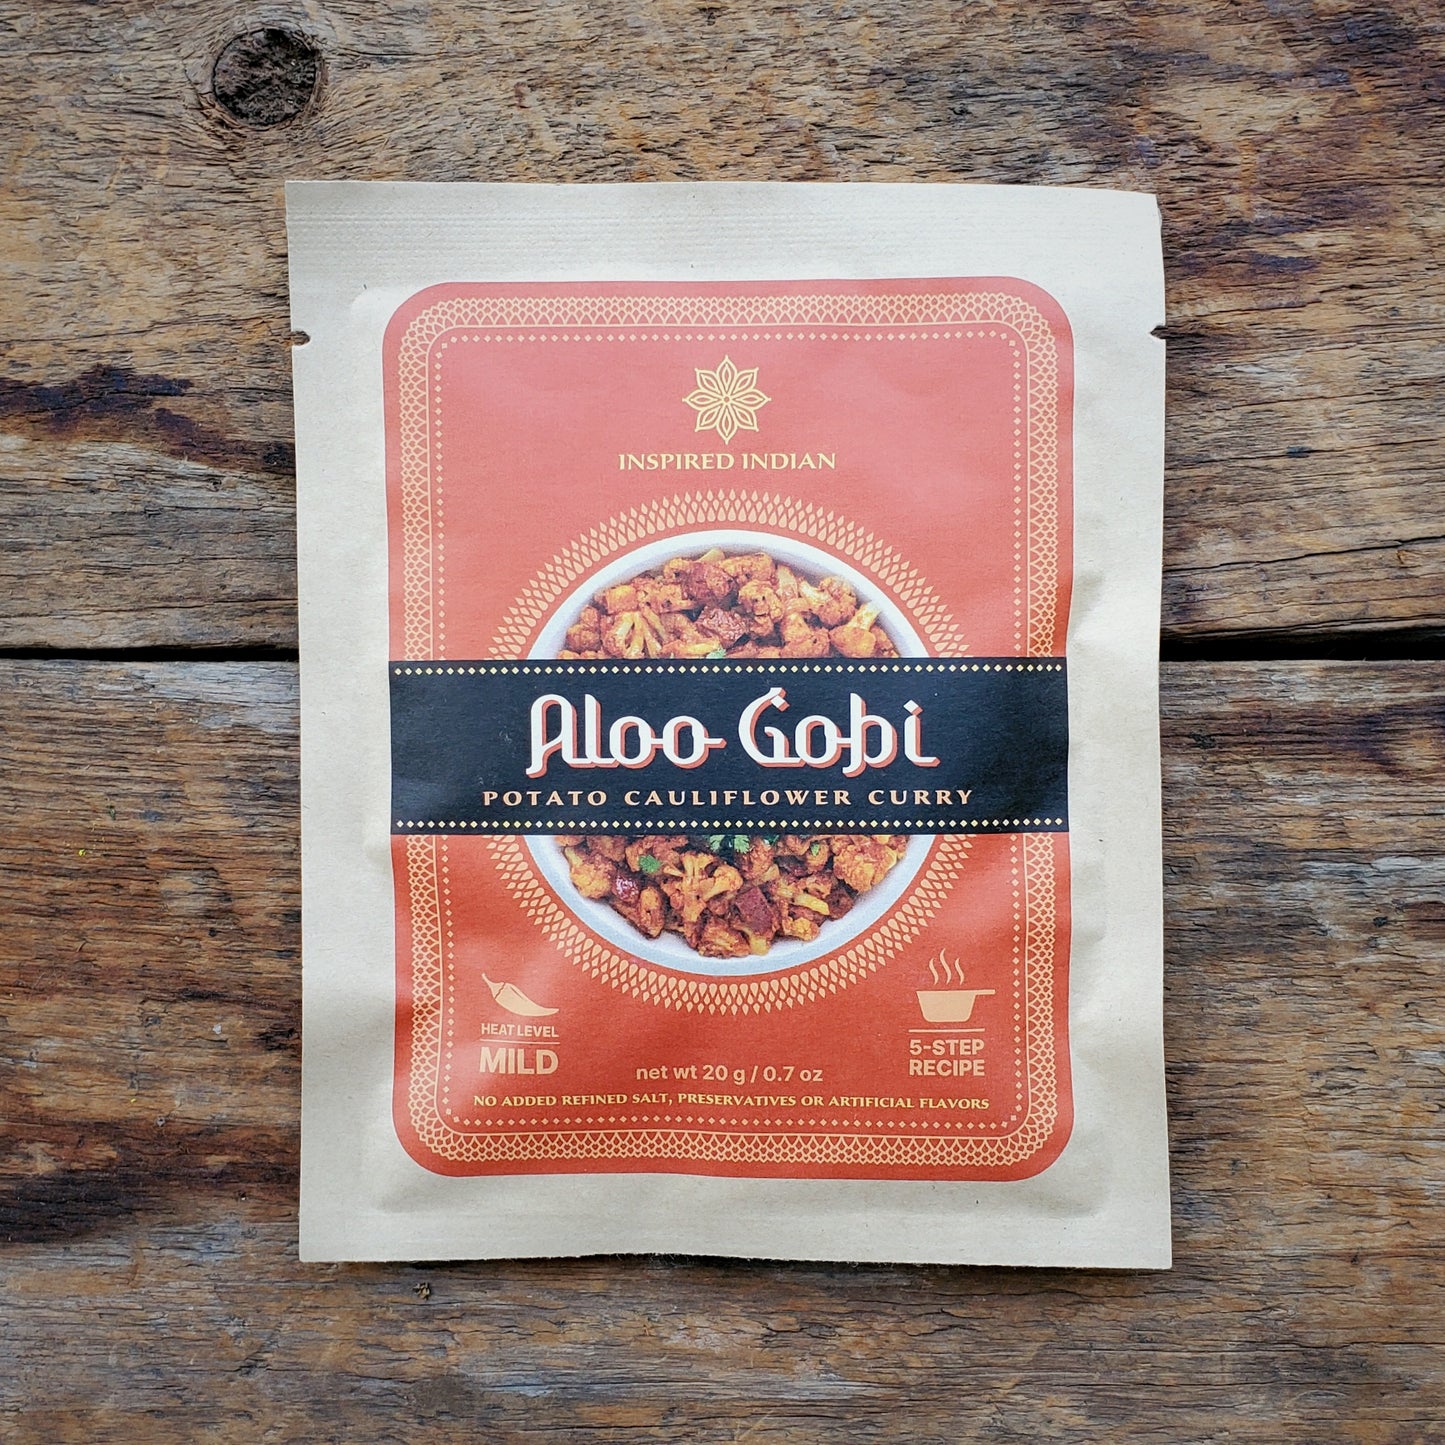 Aloo Gobi Spice Kit - 20 g